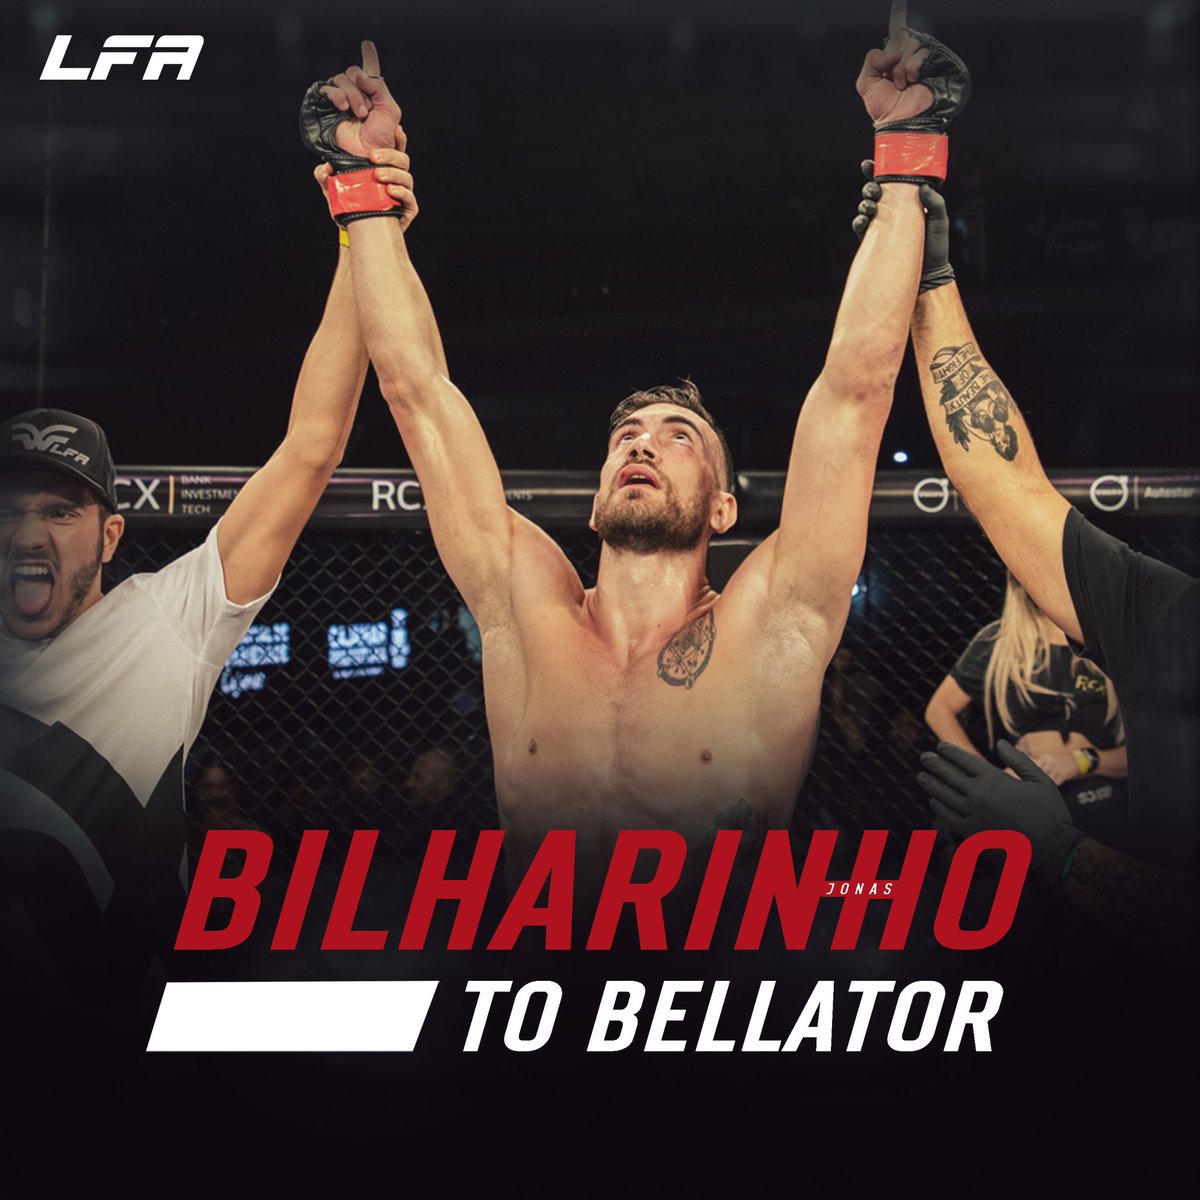 Congrats to @LFAfighting star @JonasBilharinho on signing with #Bellator! #MMA #LFANation #BellatorMMA